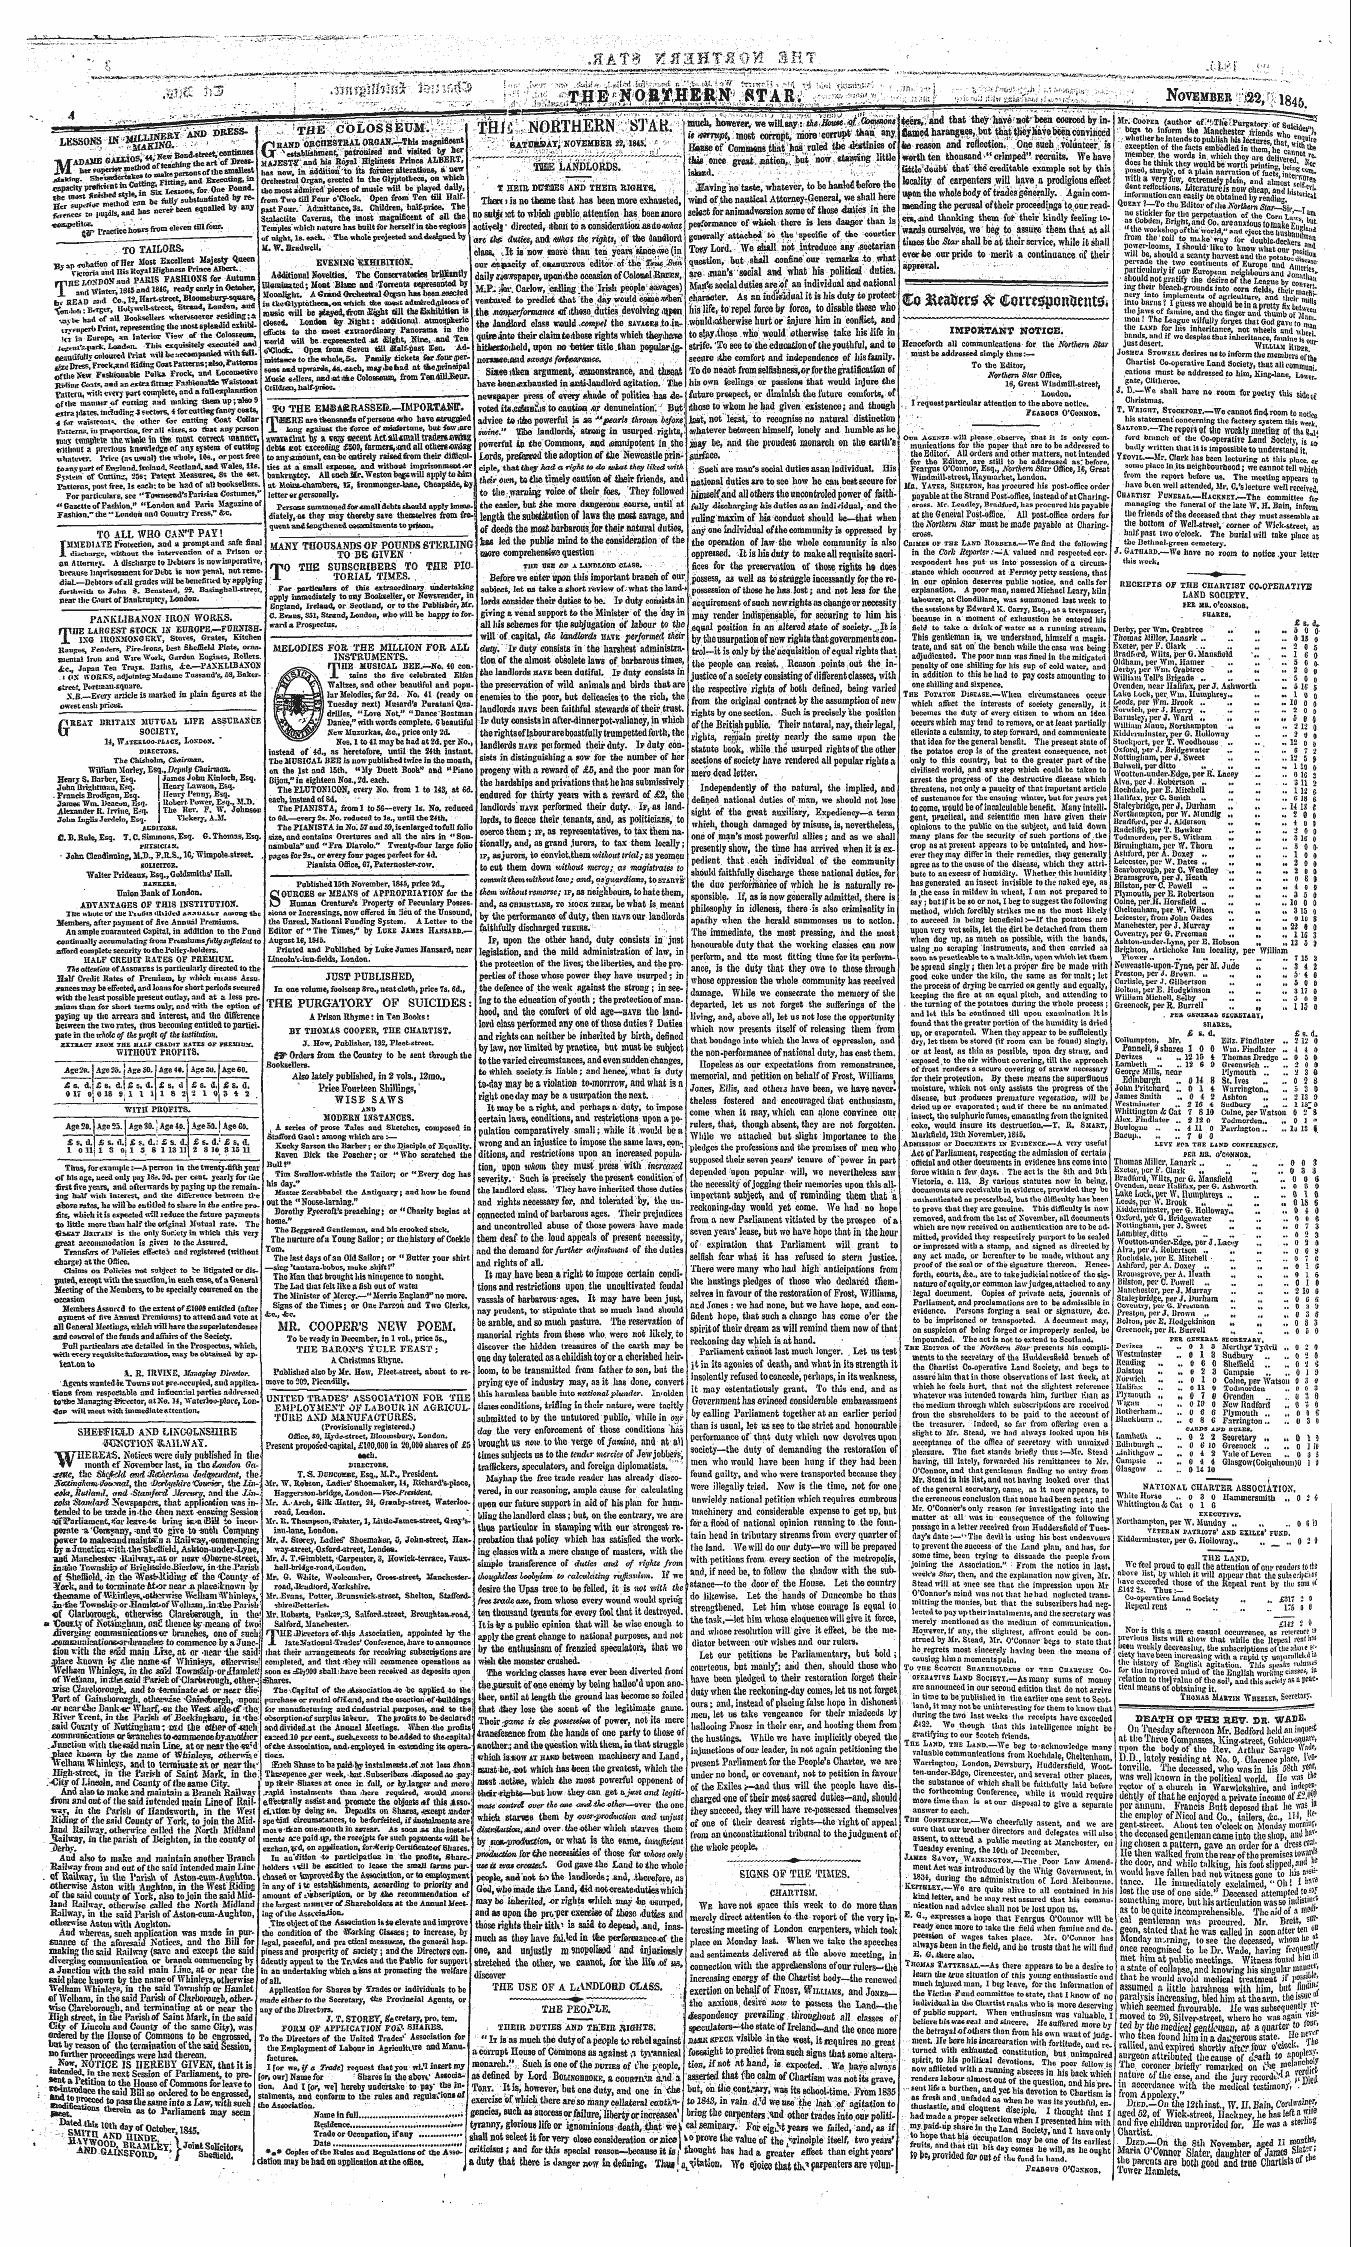 Northern Star (1837-1852): jS F Y, 3rd edition - Ad00416